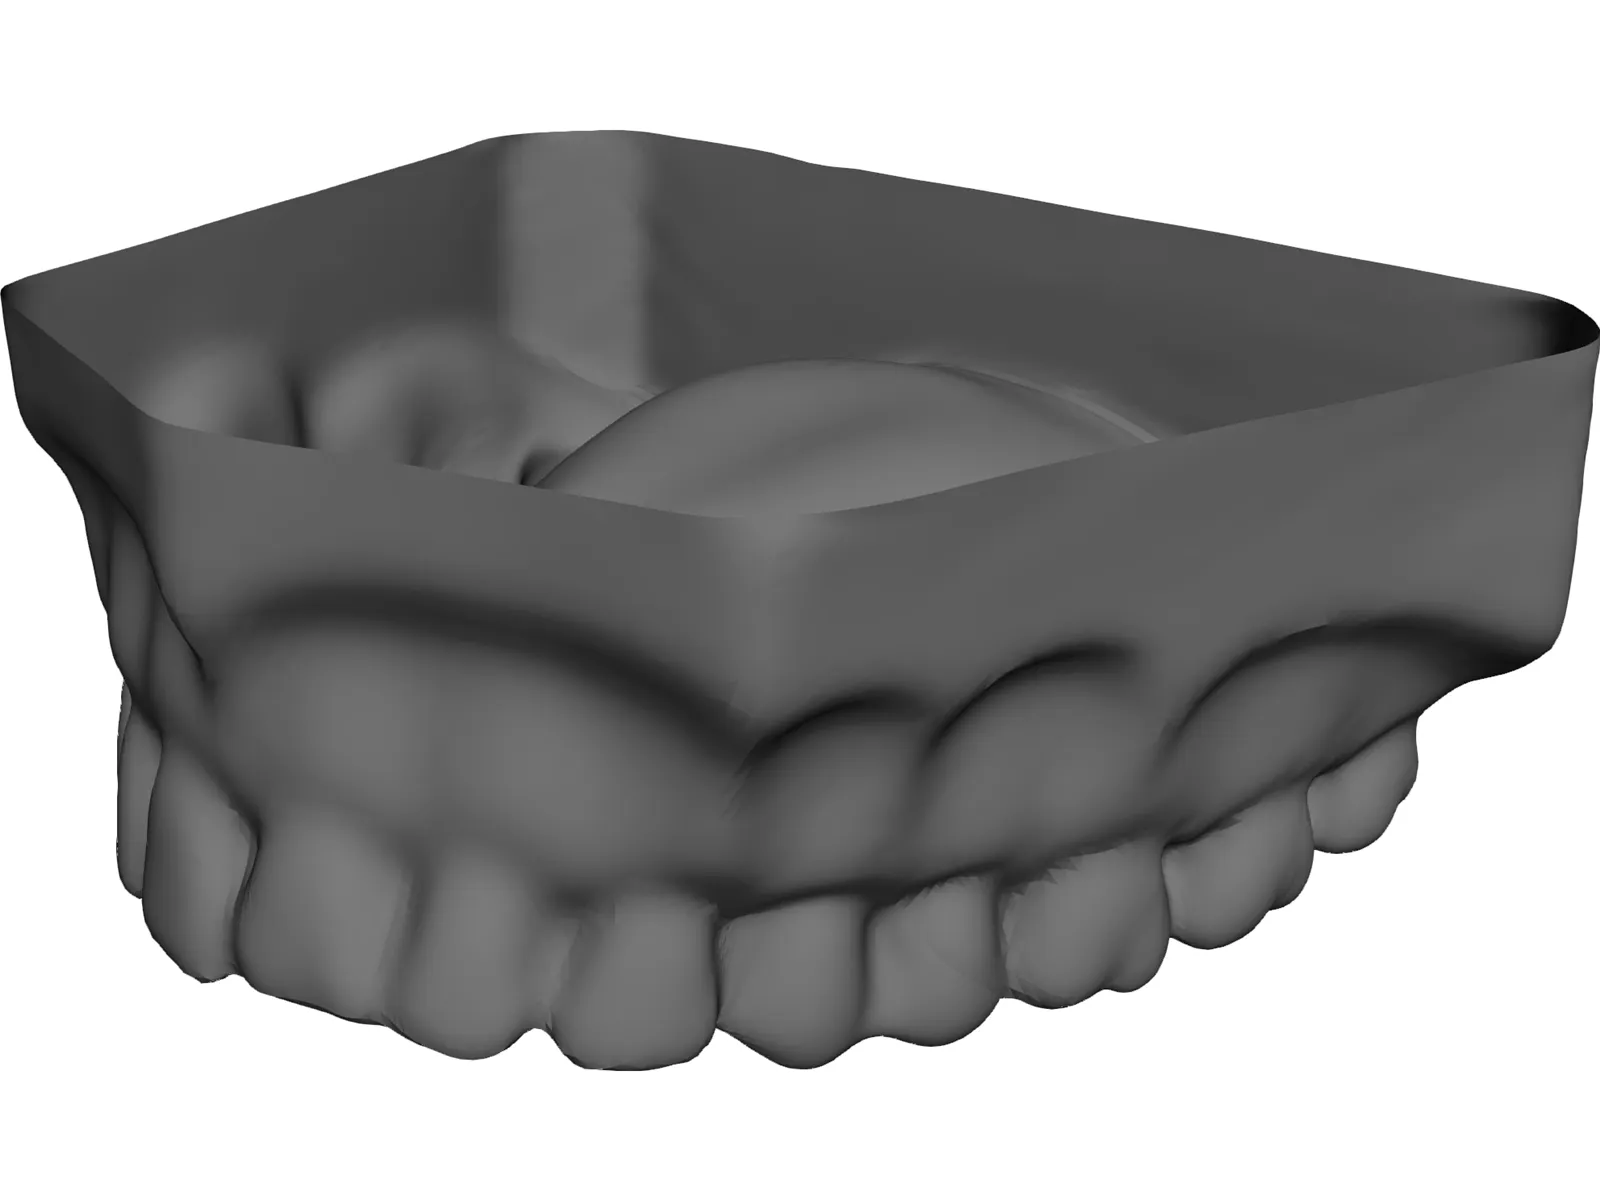 Teeth Upper Surface 3D Model